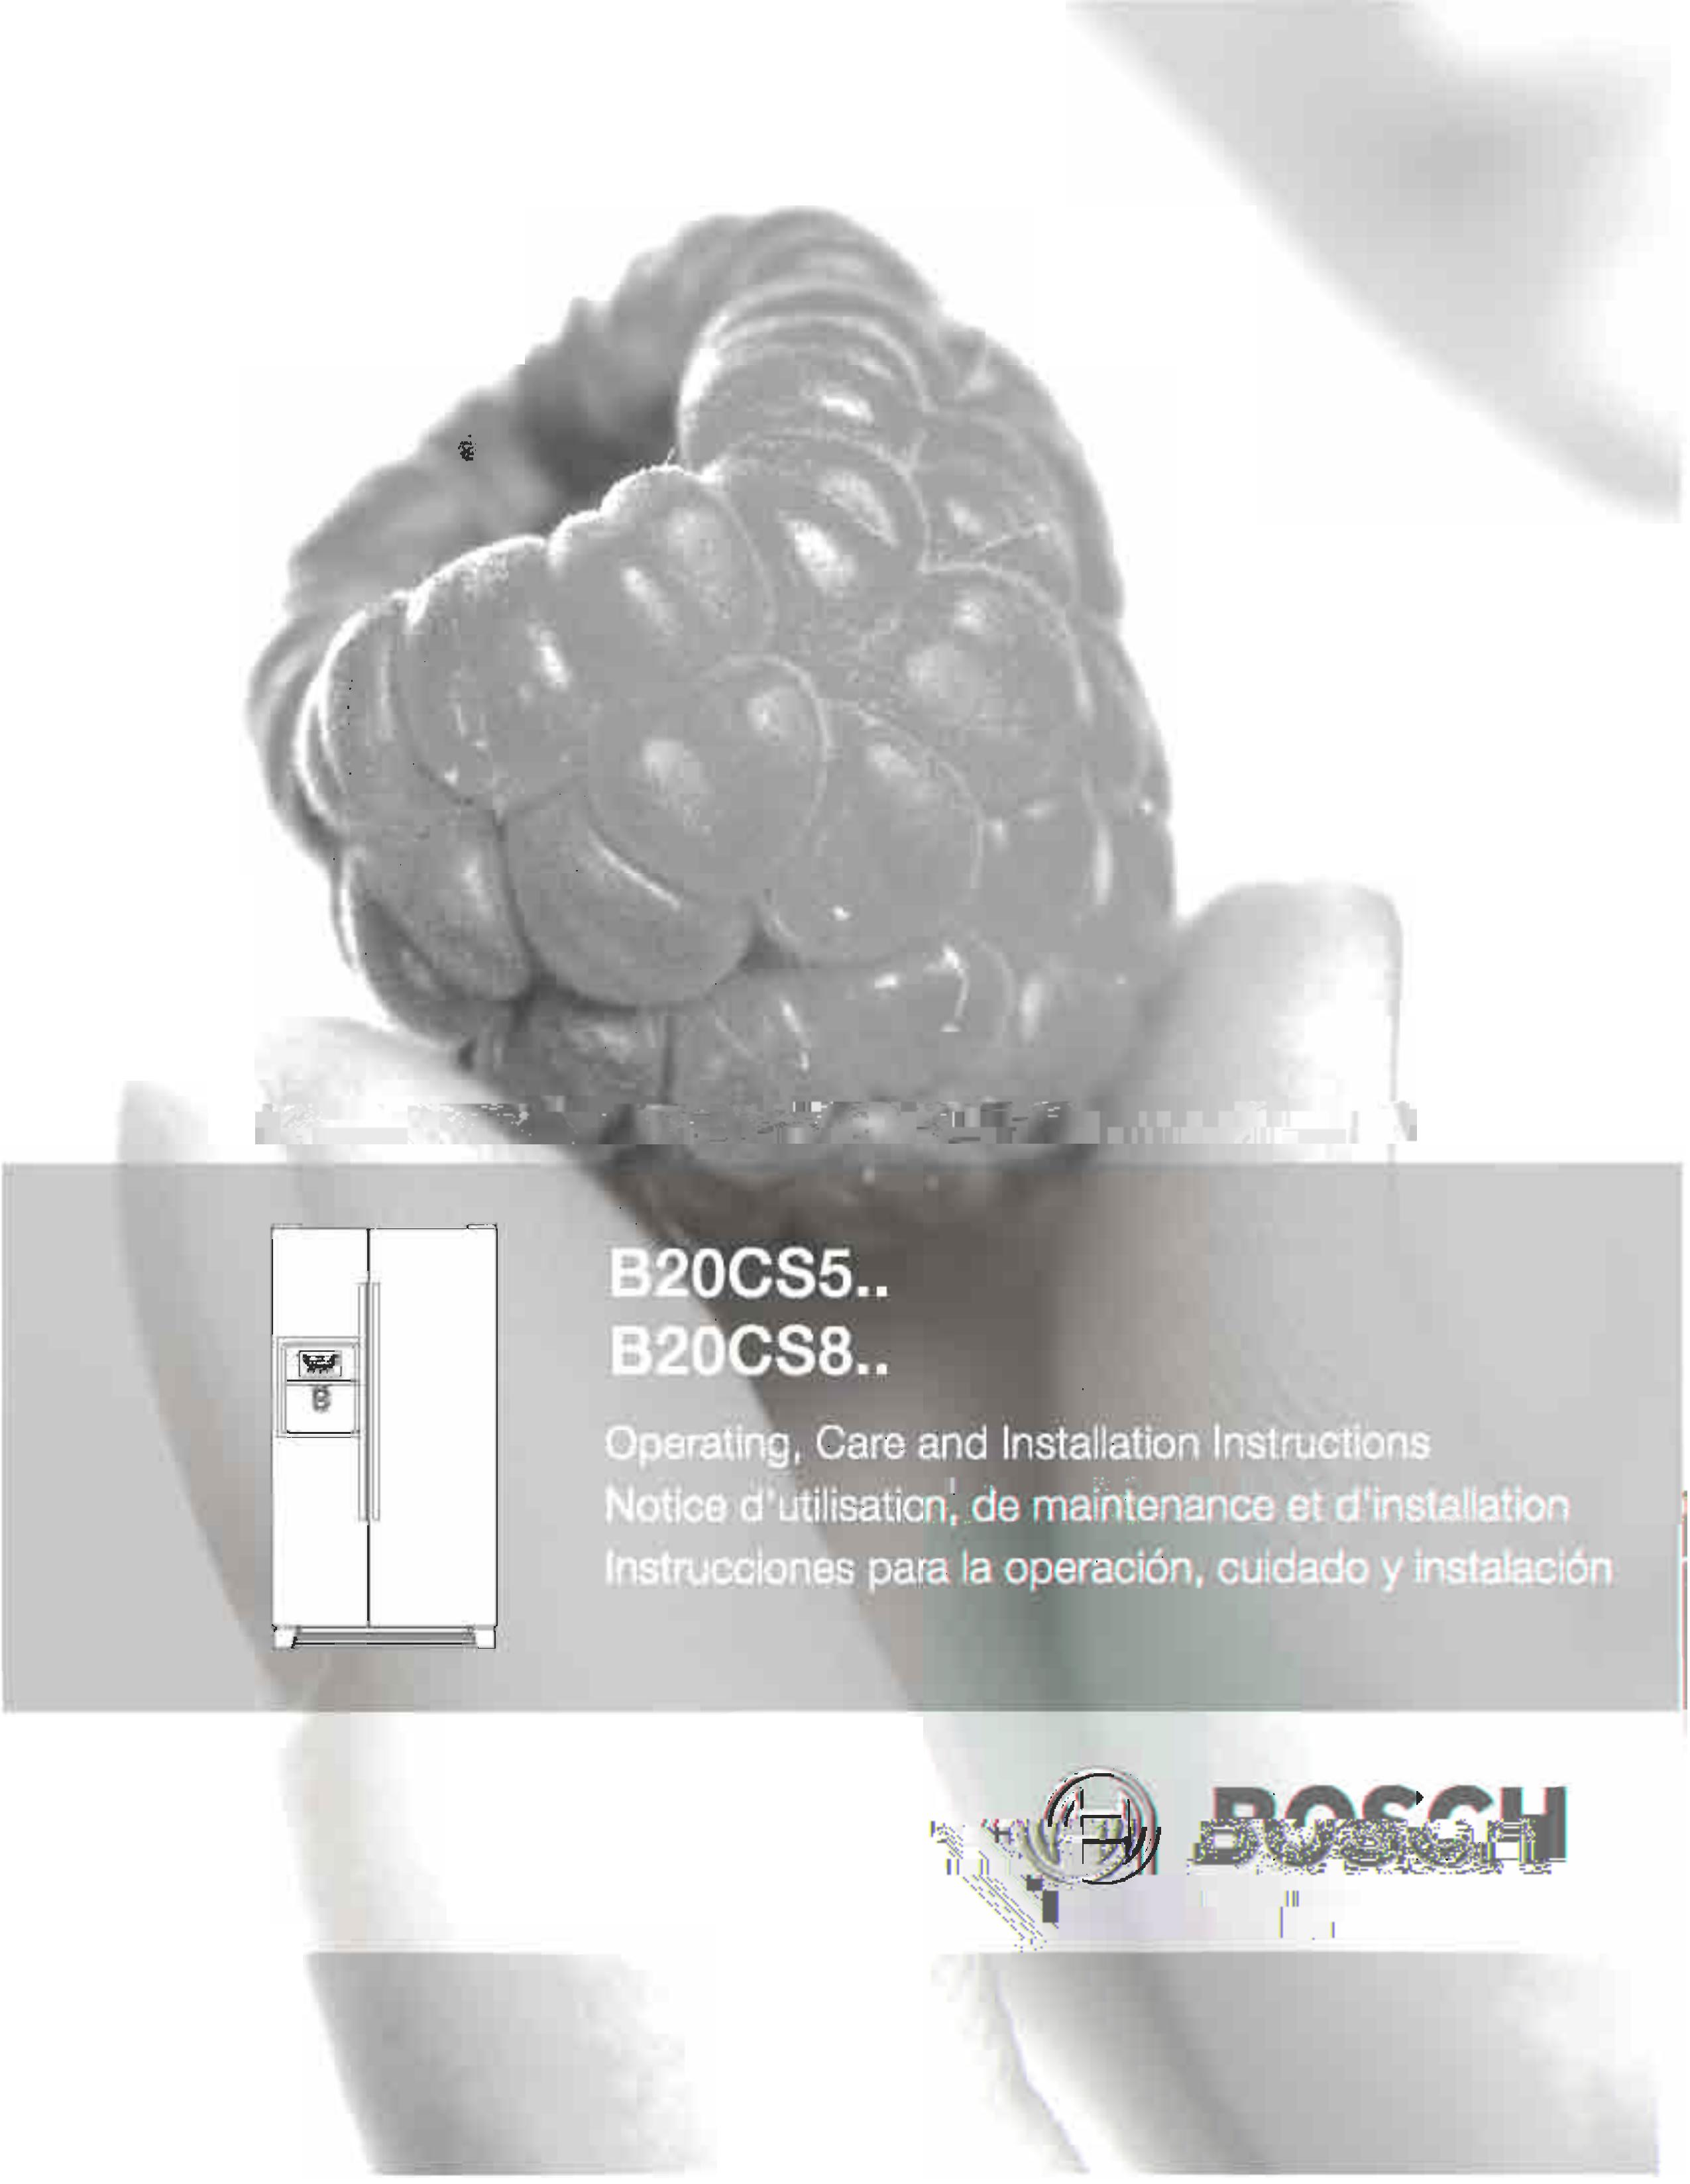 Bosch Appliances B20CS5 Refrigerator User Manual